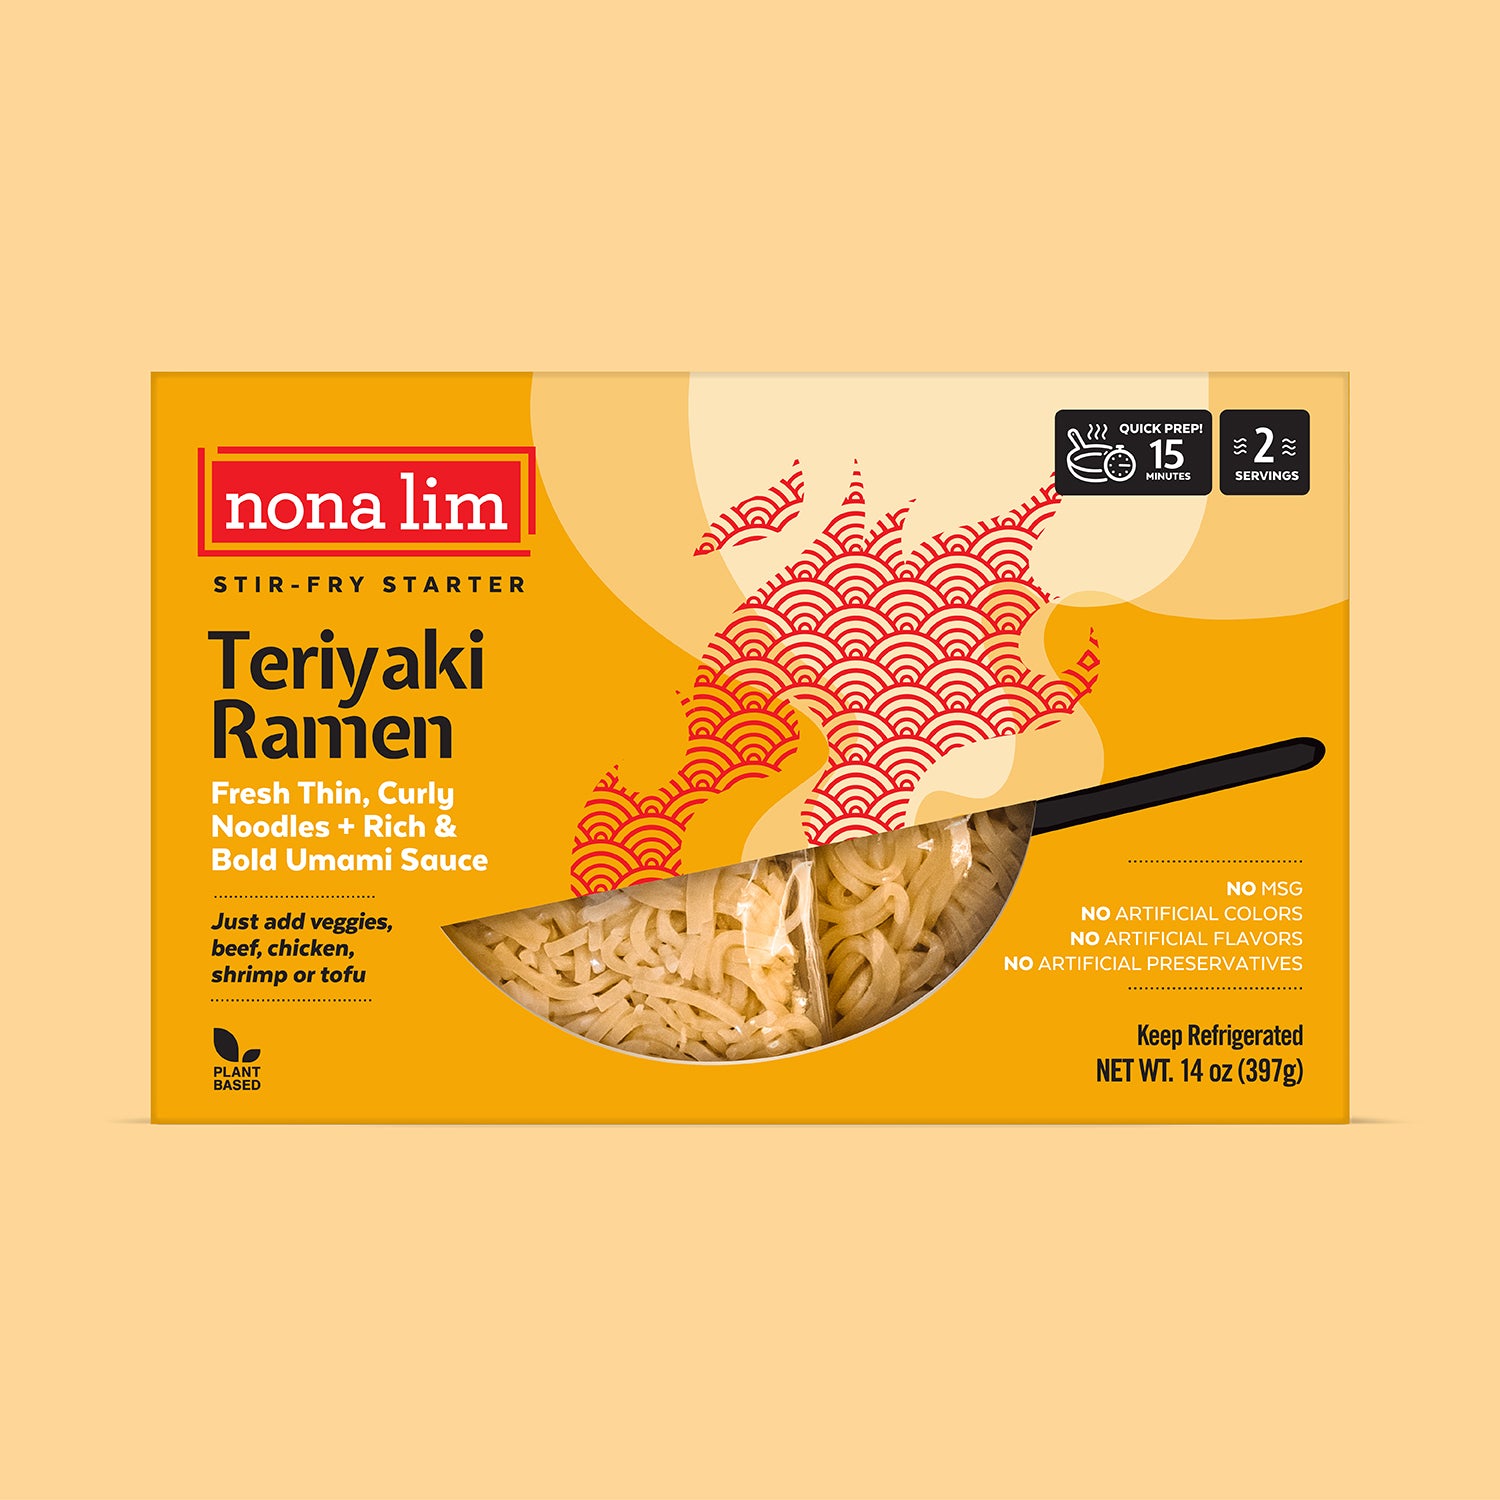 Teriyaki Ramen Stir Fry Kit - 6 Pack (Non-GMO) // Nona Lim